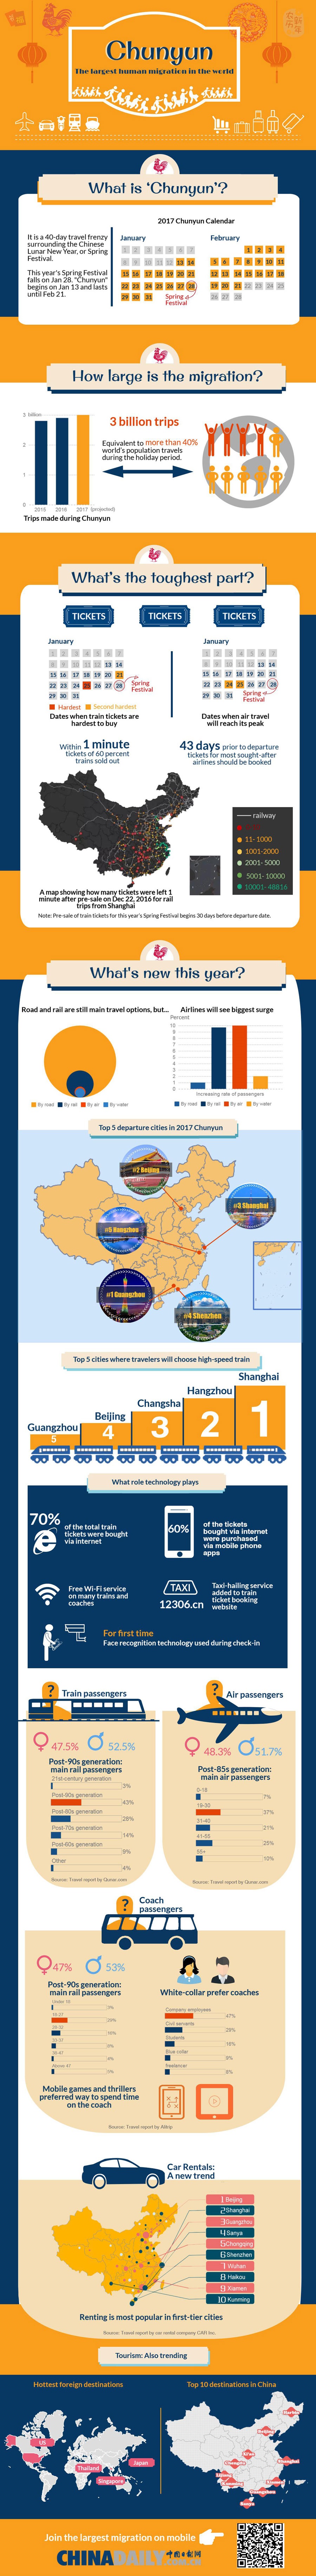 <EM>Chunyun</EM>: The largest human migration in the world